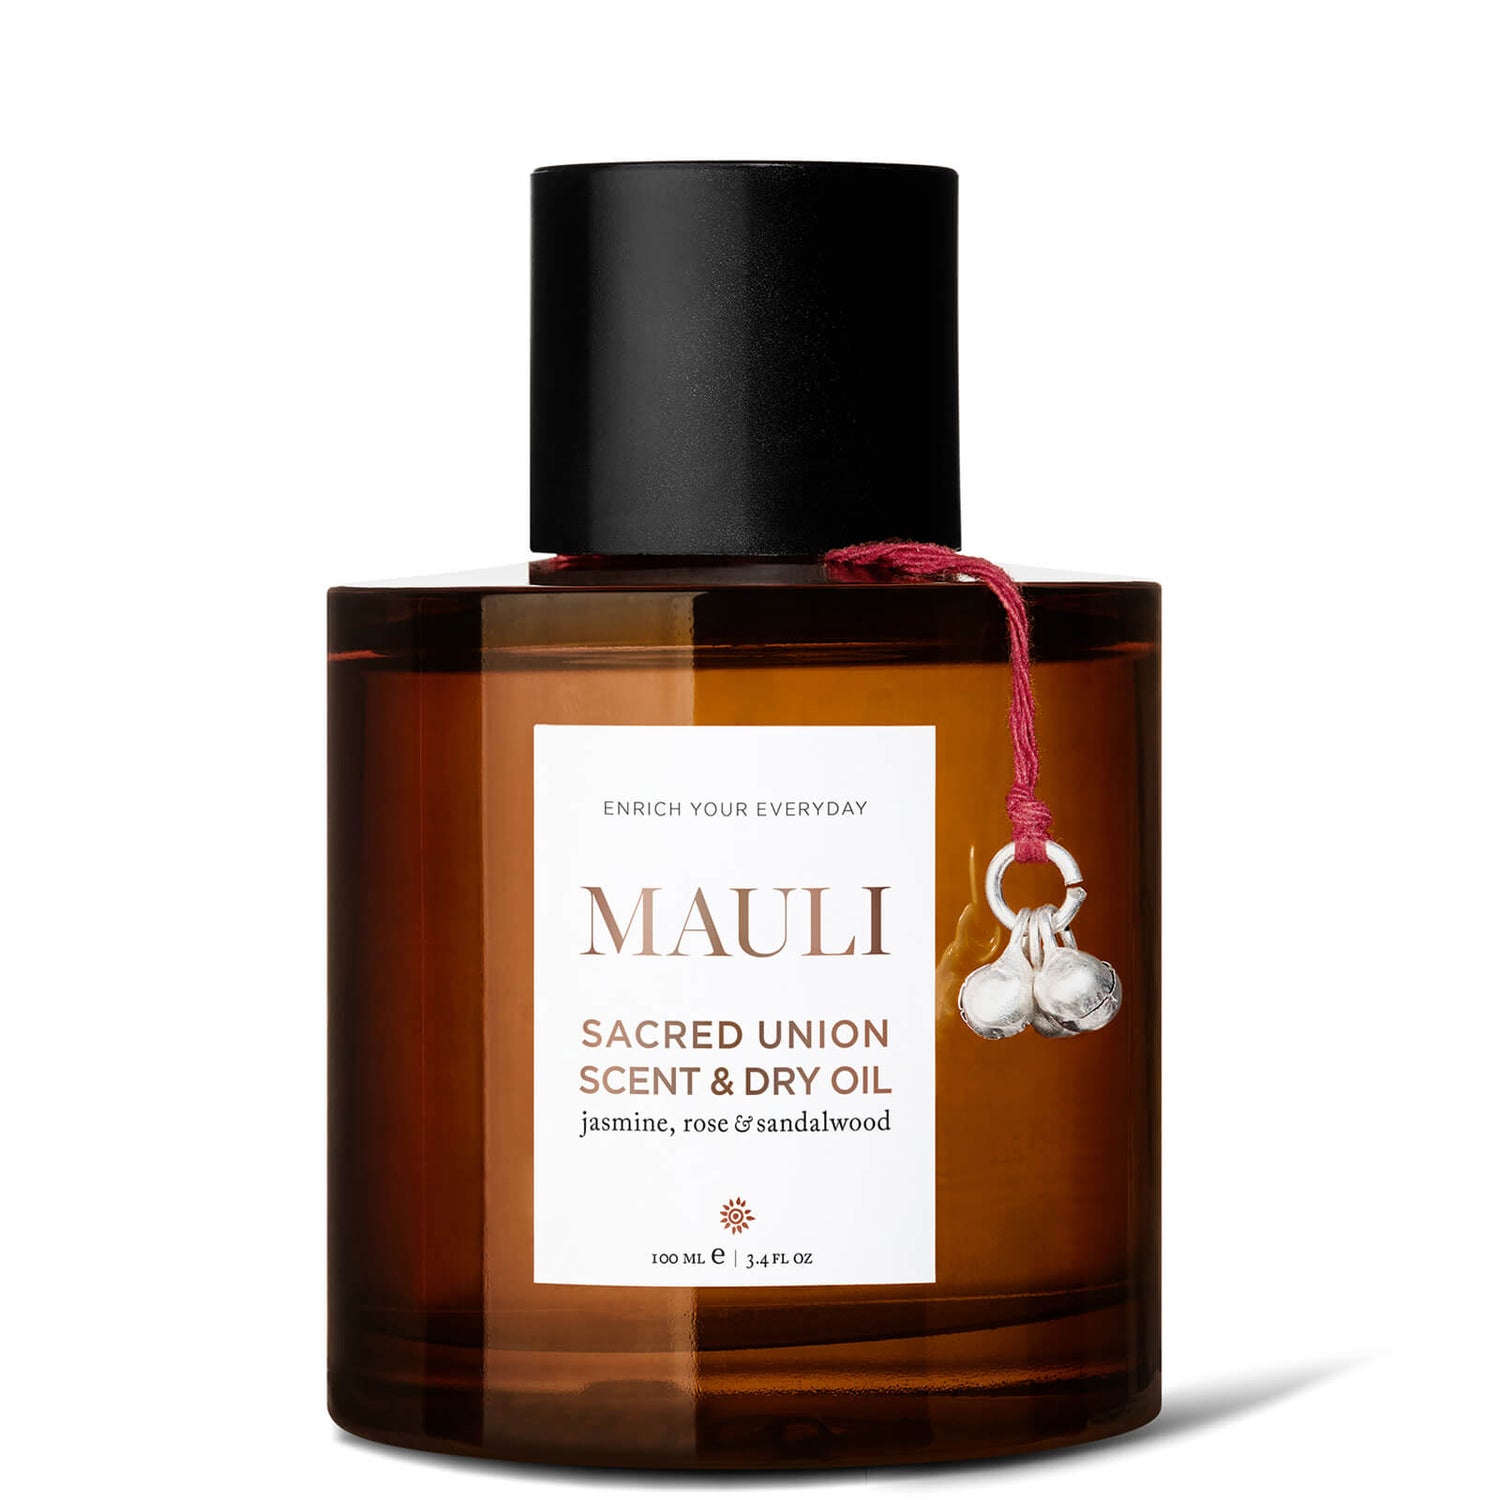 Mauli Sacred Union Scent and Dry Oil 100 ml